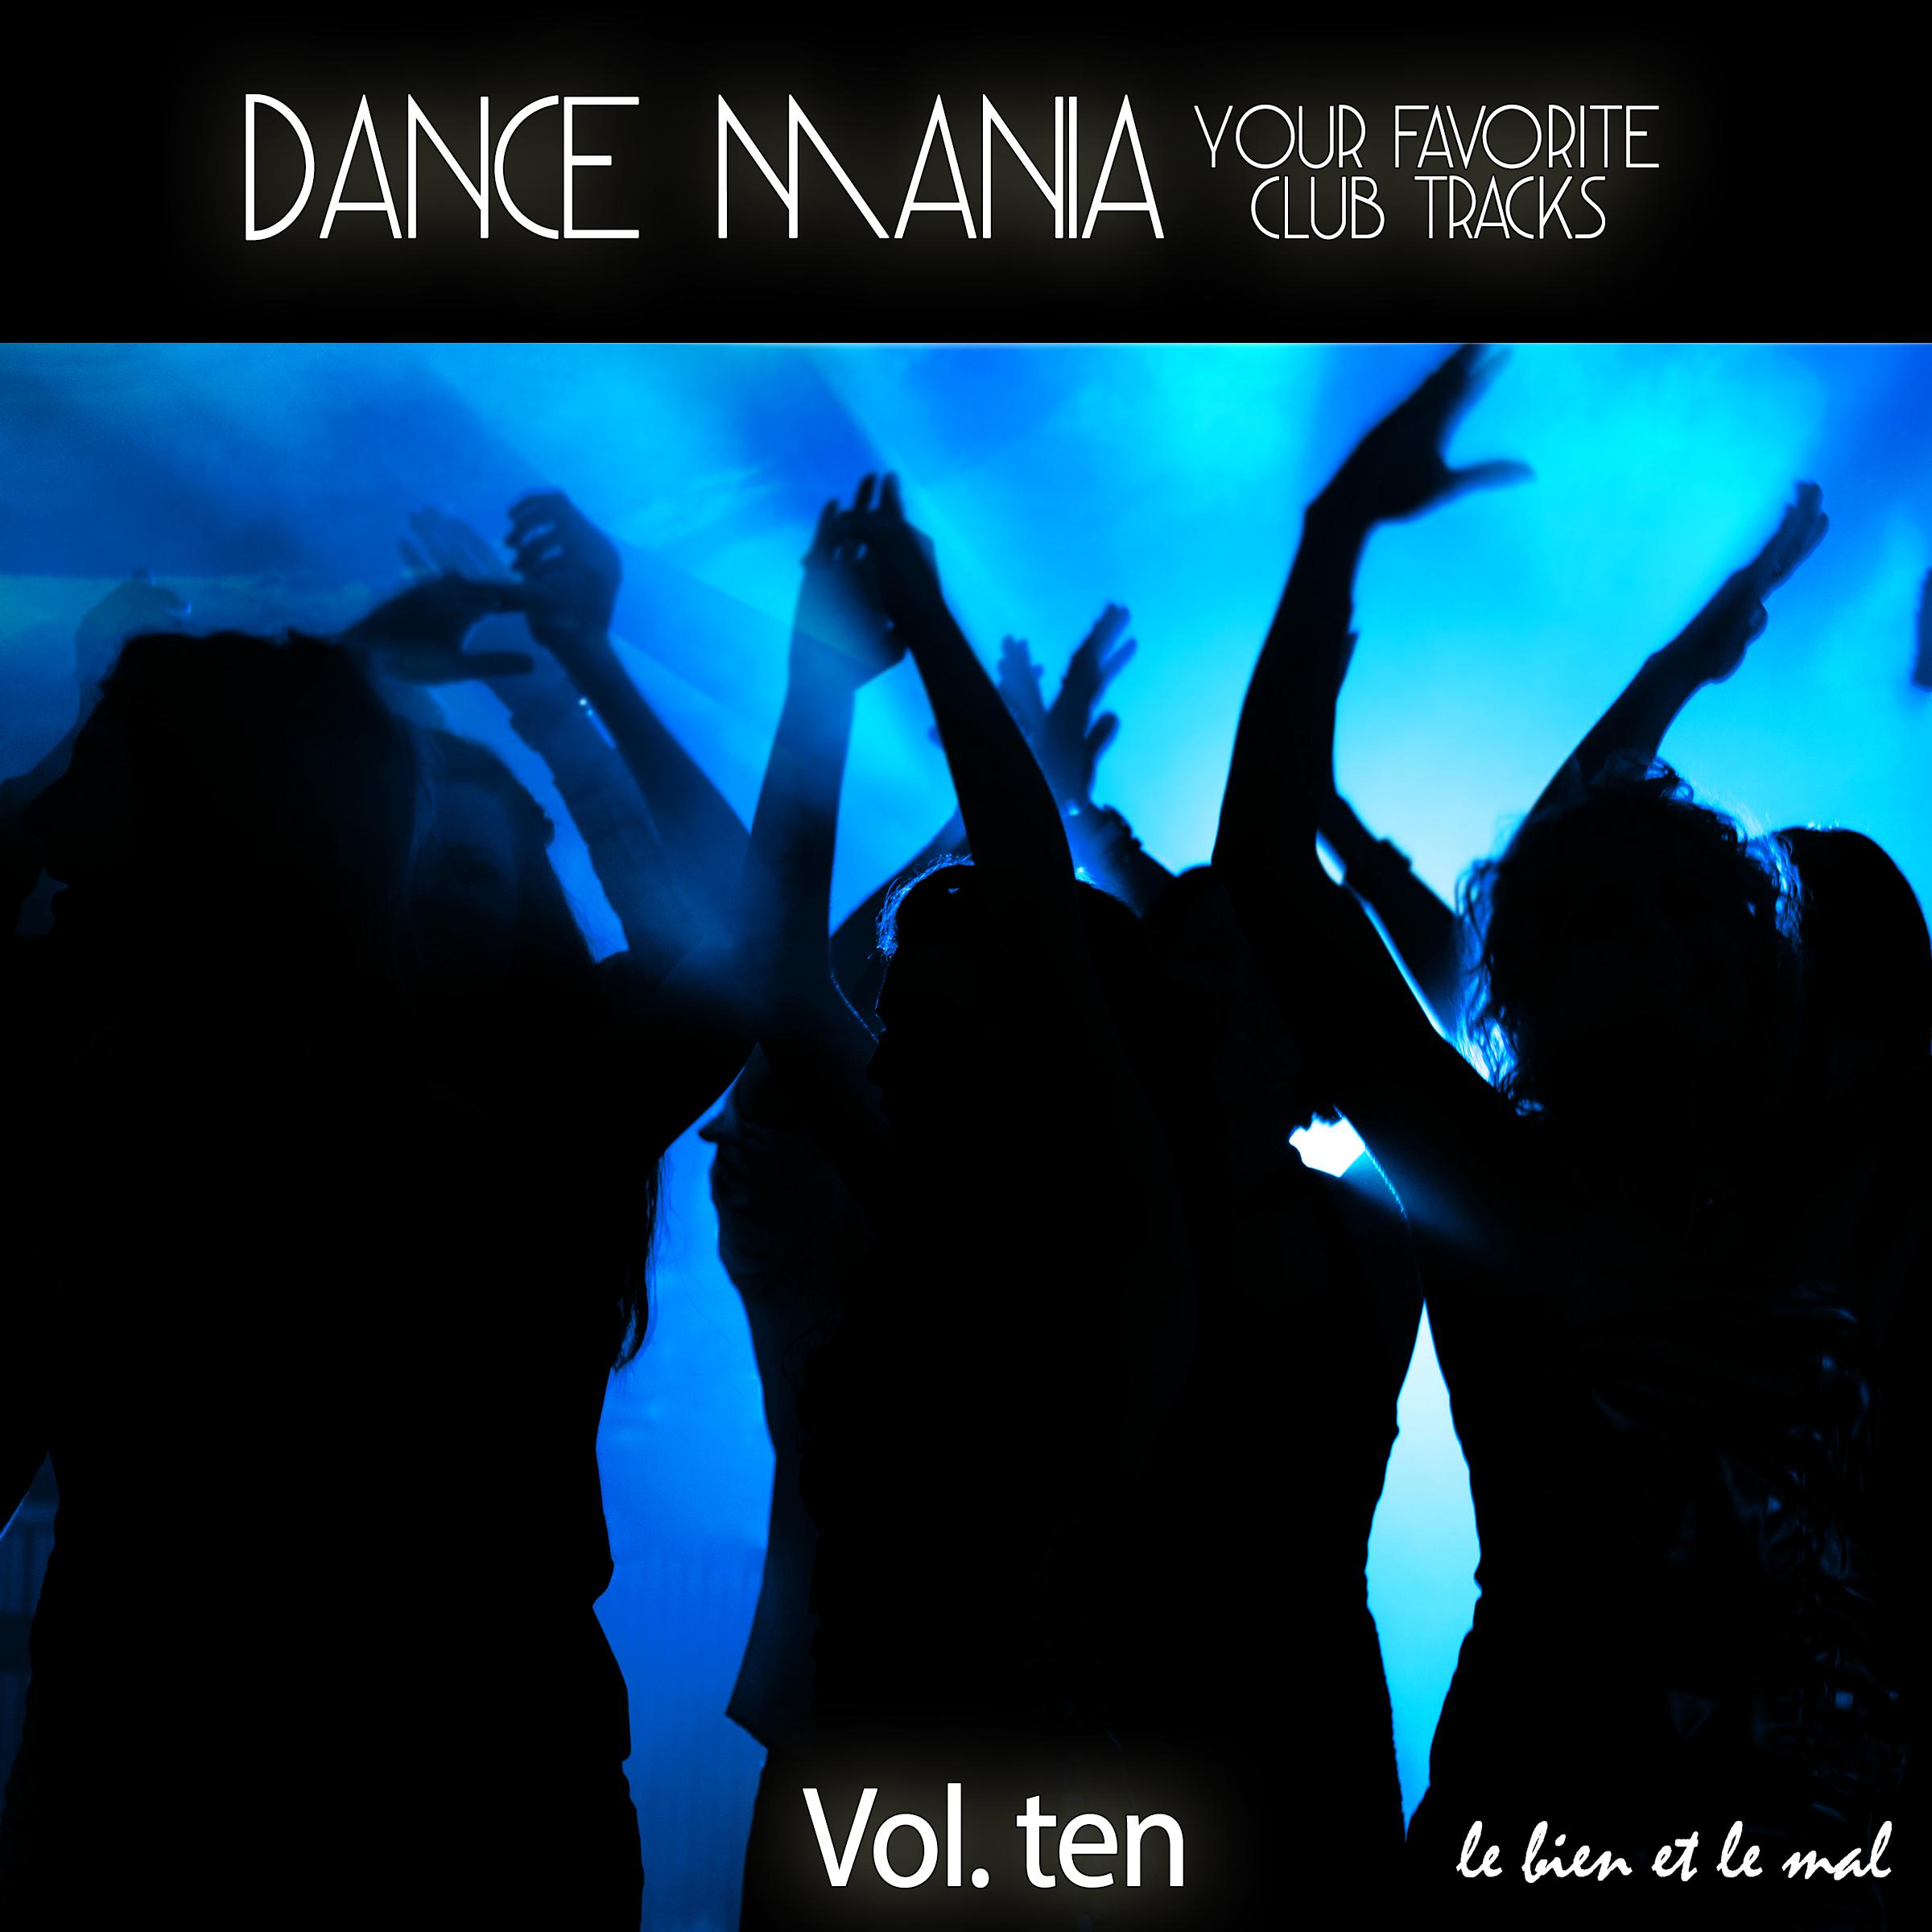 Dance Mania - Your Favorite Club Tracks, Vol. 10